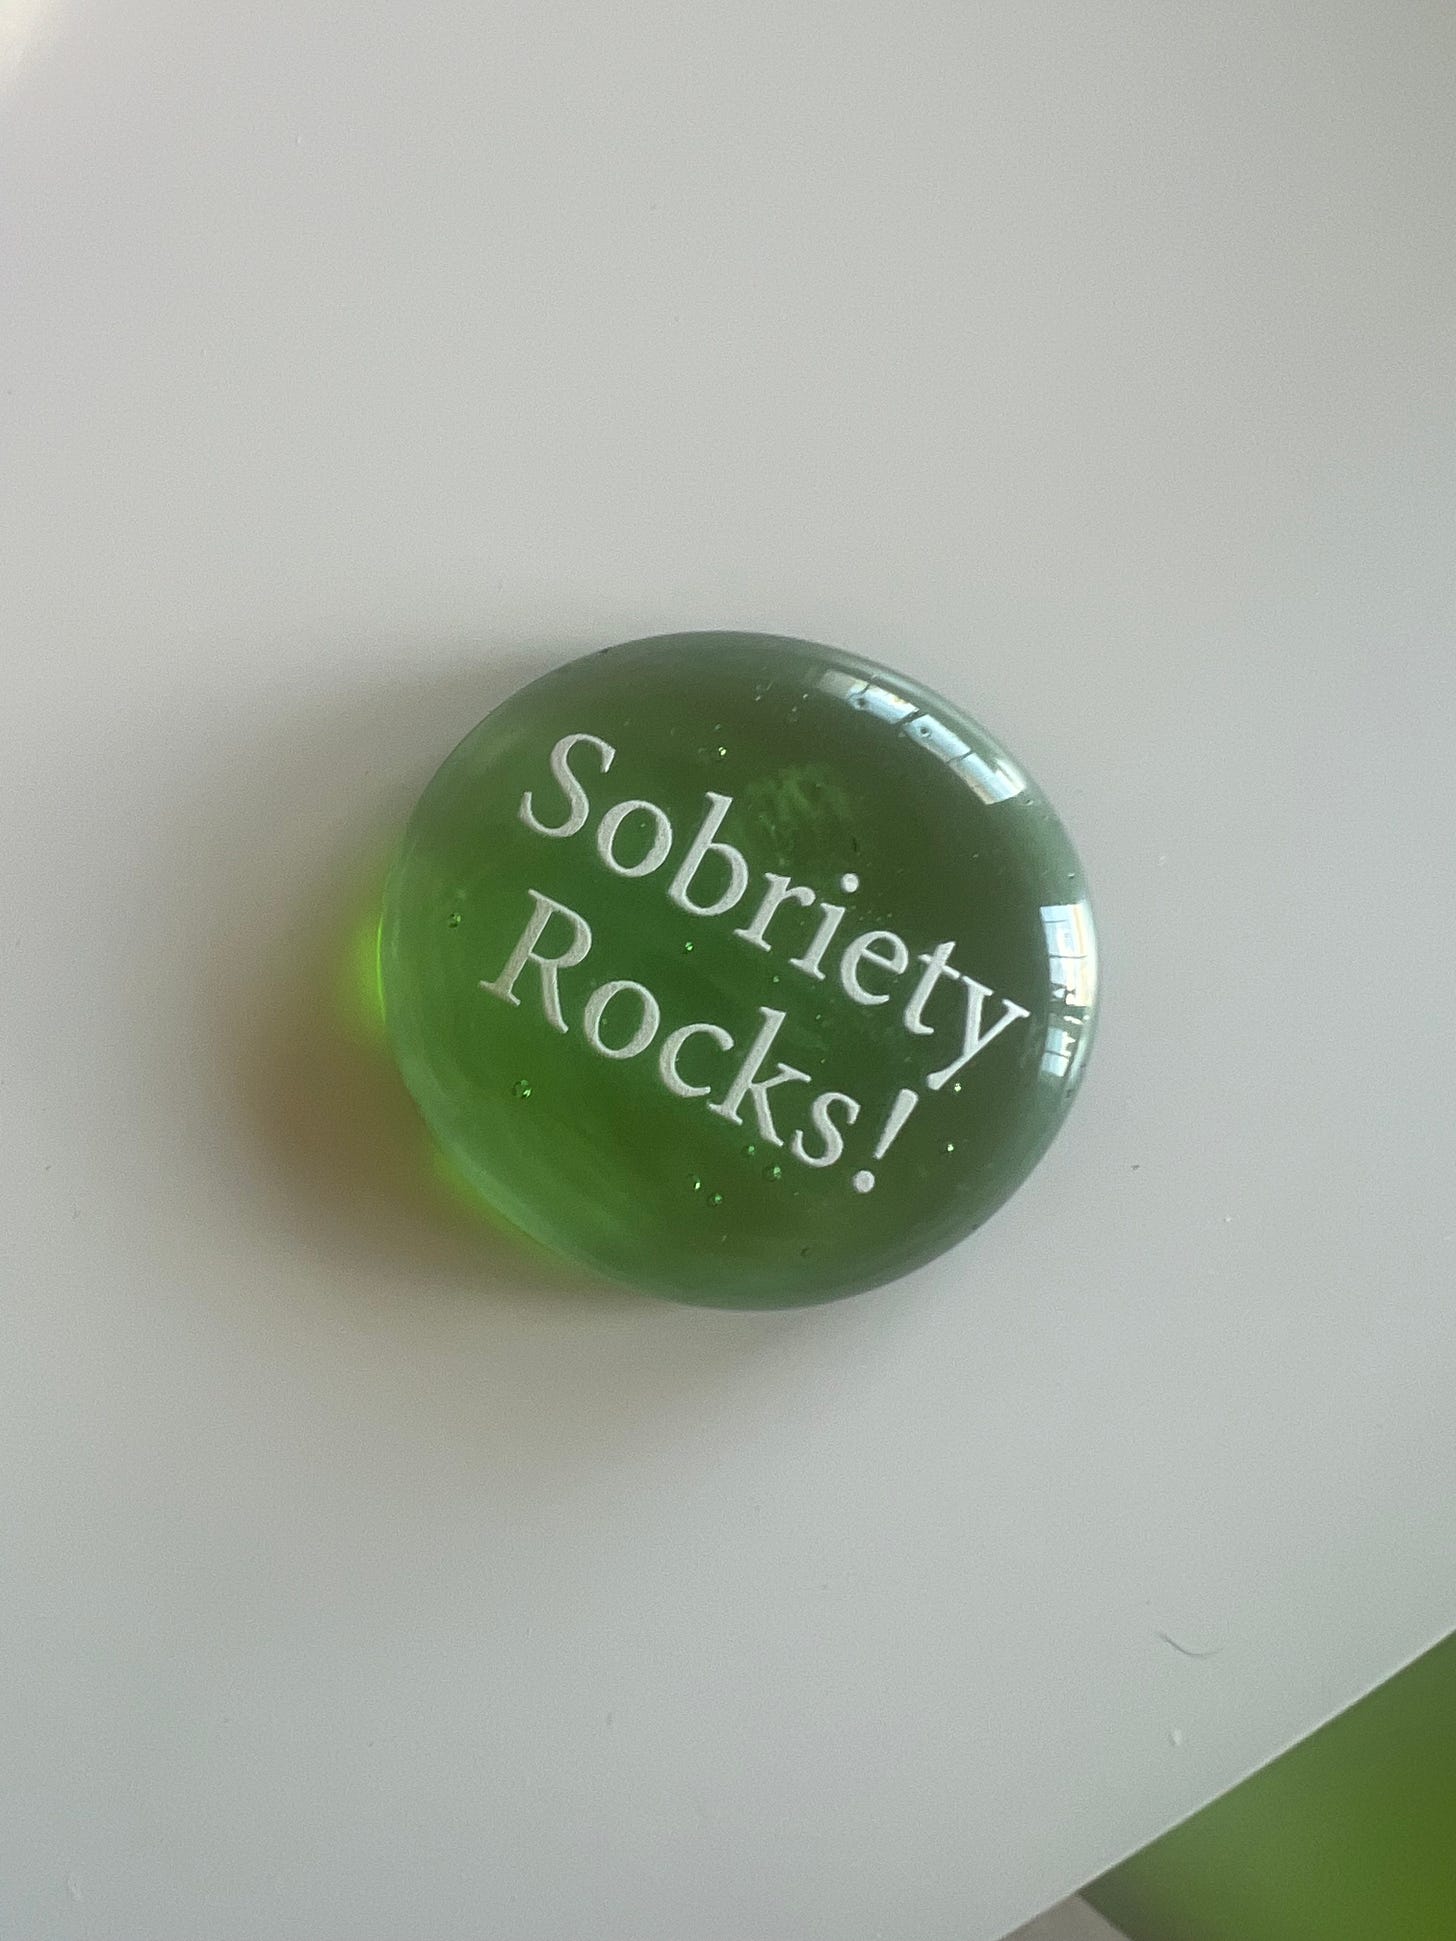 rock that says "Sobriety Rocks"